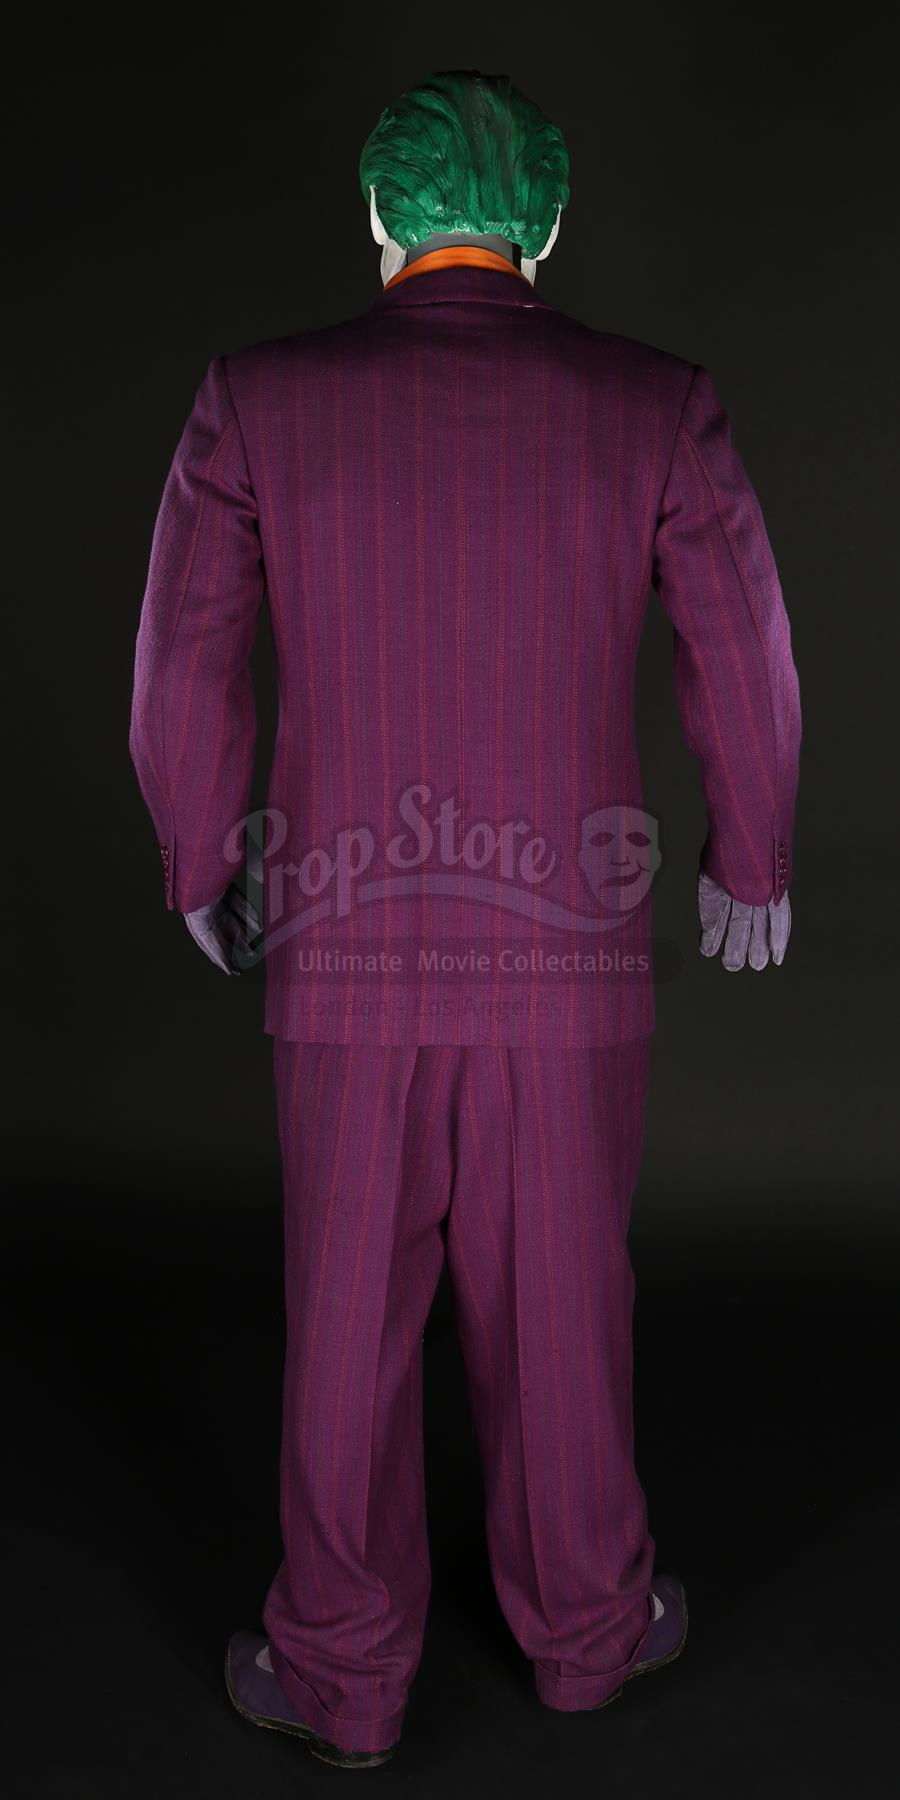 Screen-used Joker costume (Jack Napier suit - 1989)